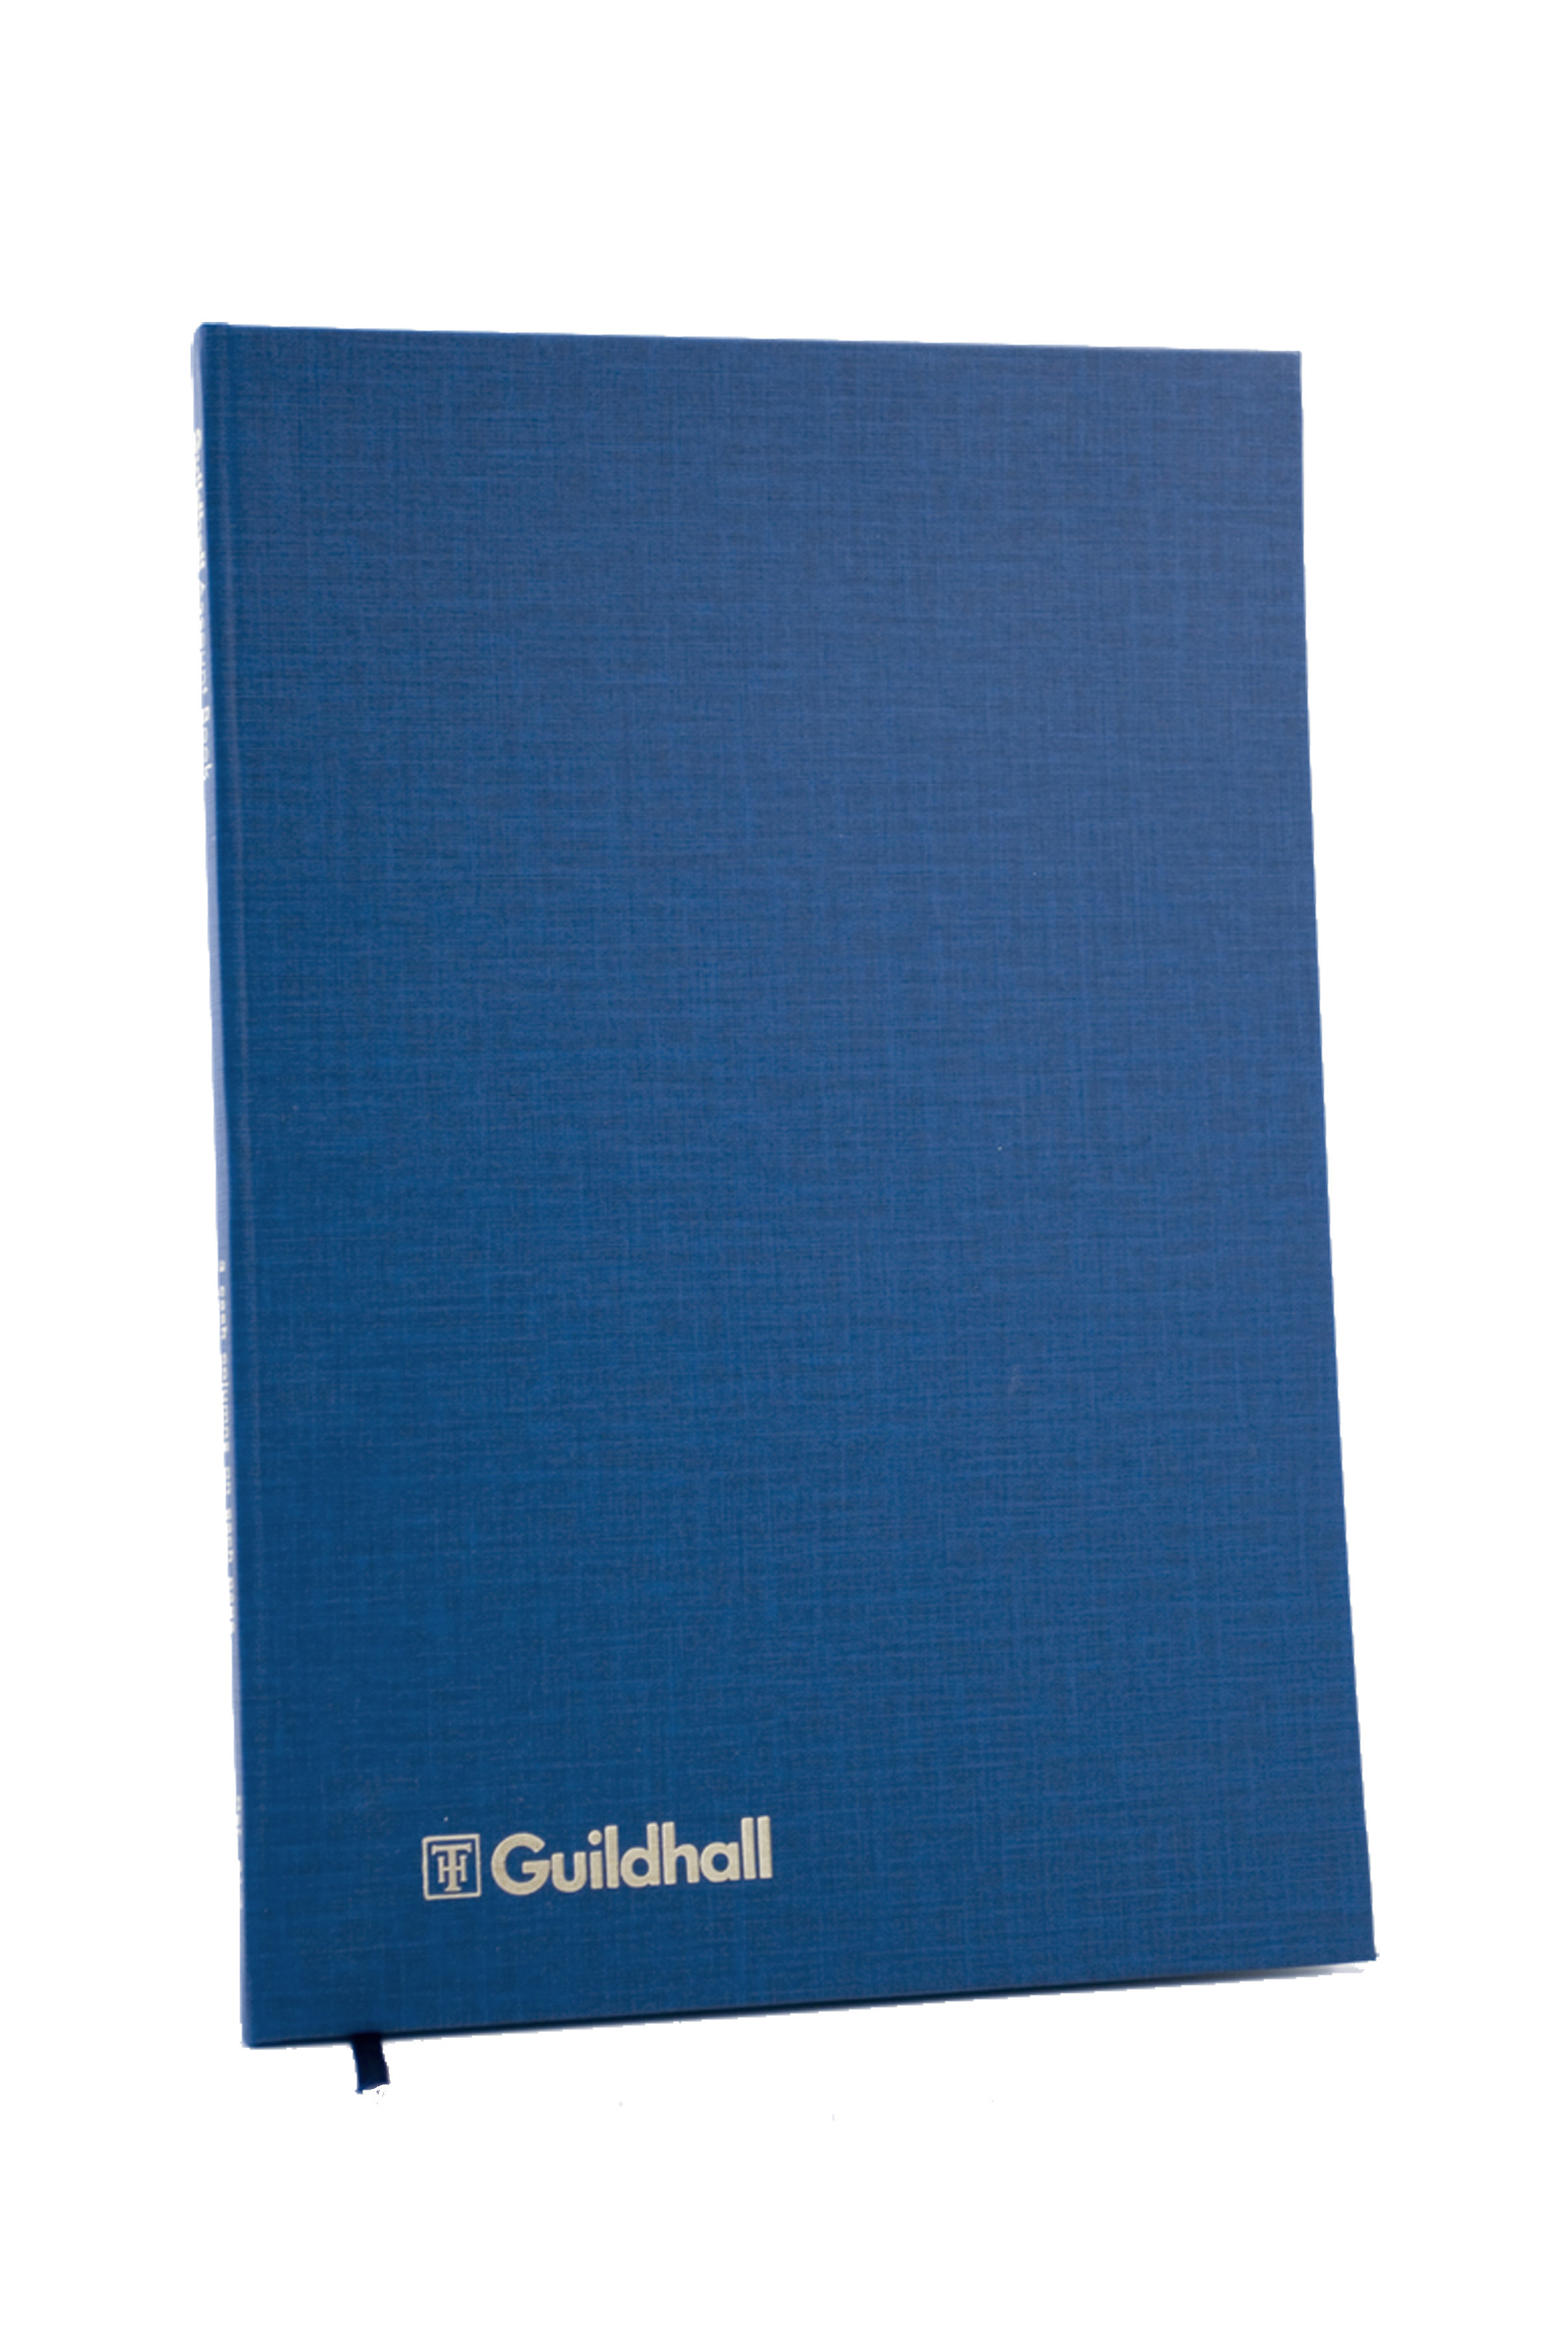 Guildhall Account Book 14 Column 80 Leaf